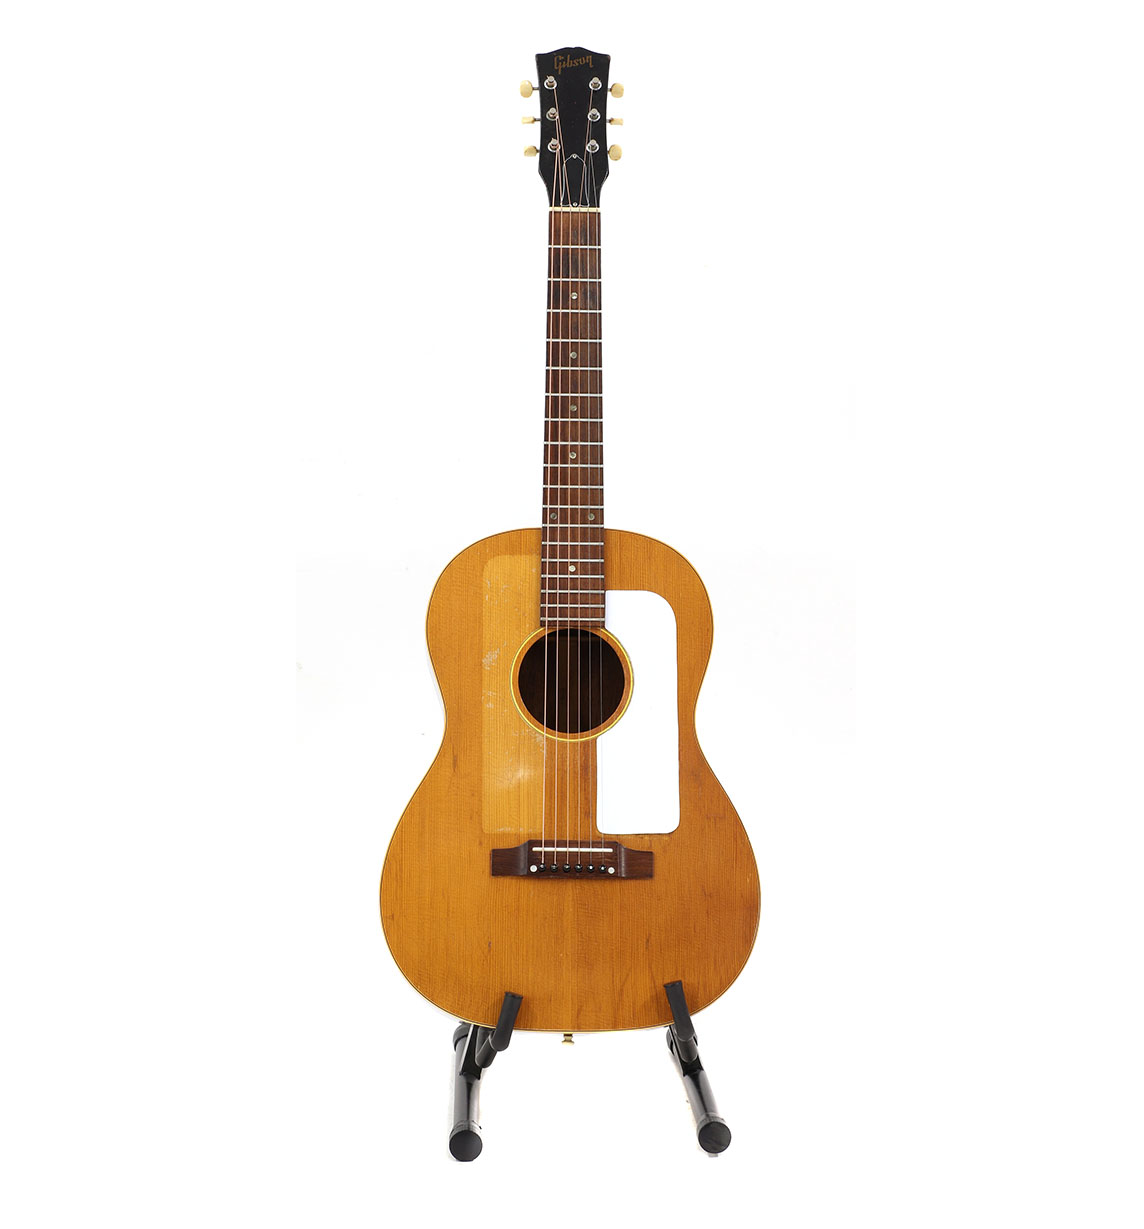 A 1968 Gibson F25 'Folksinger' acoustic guitar